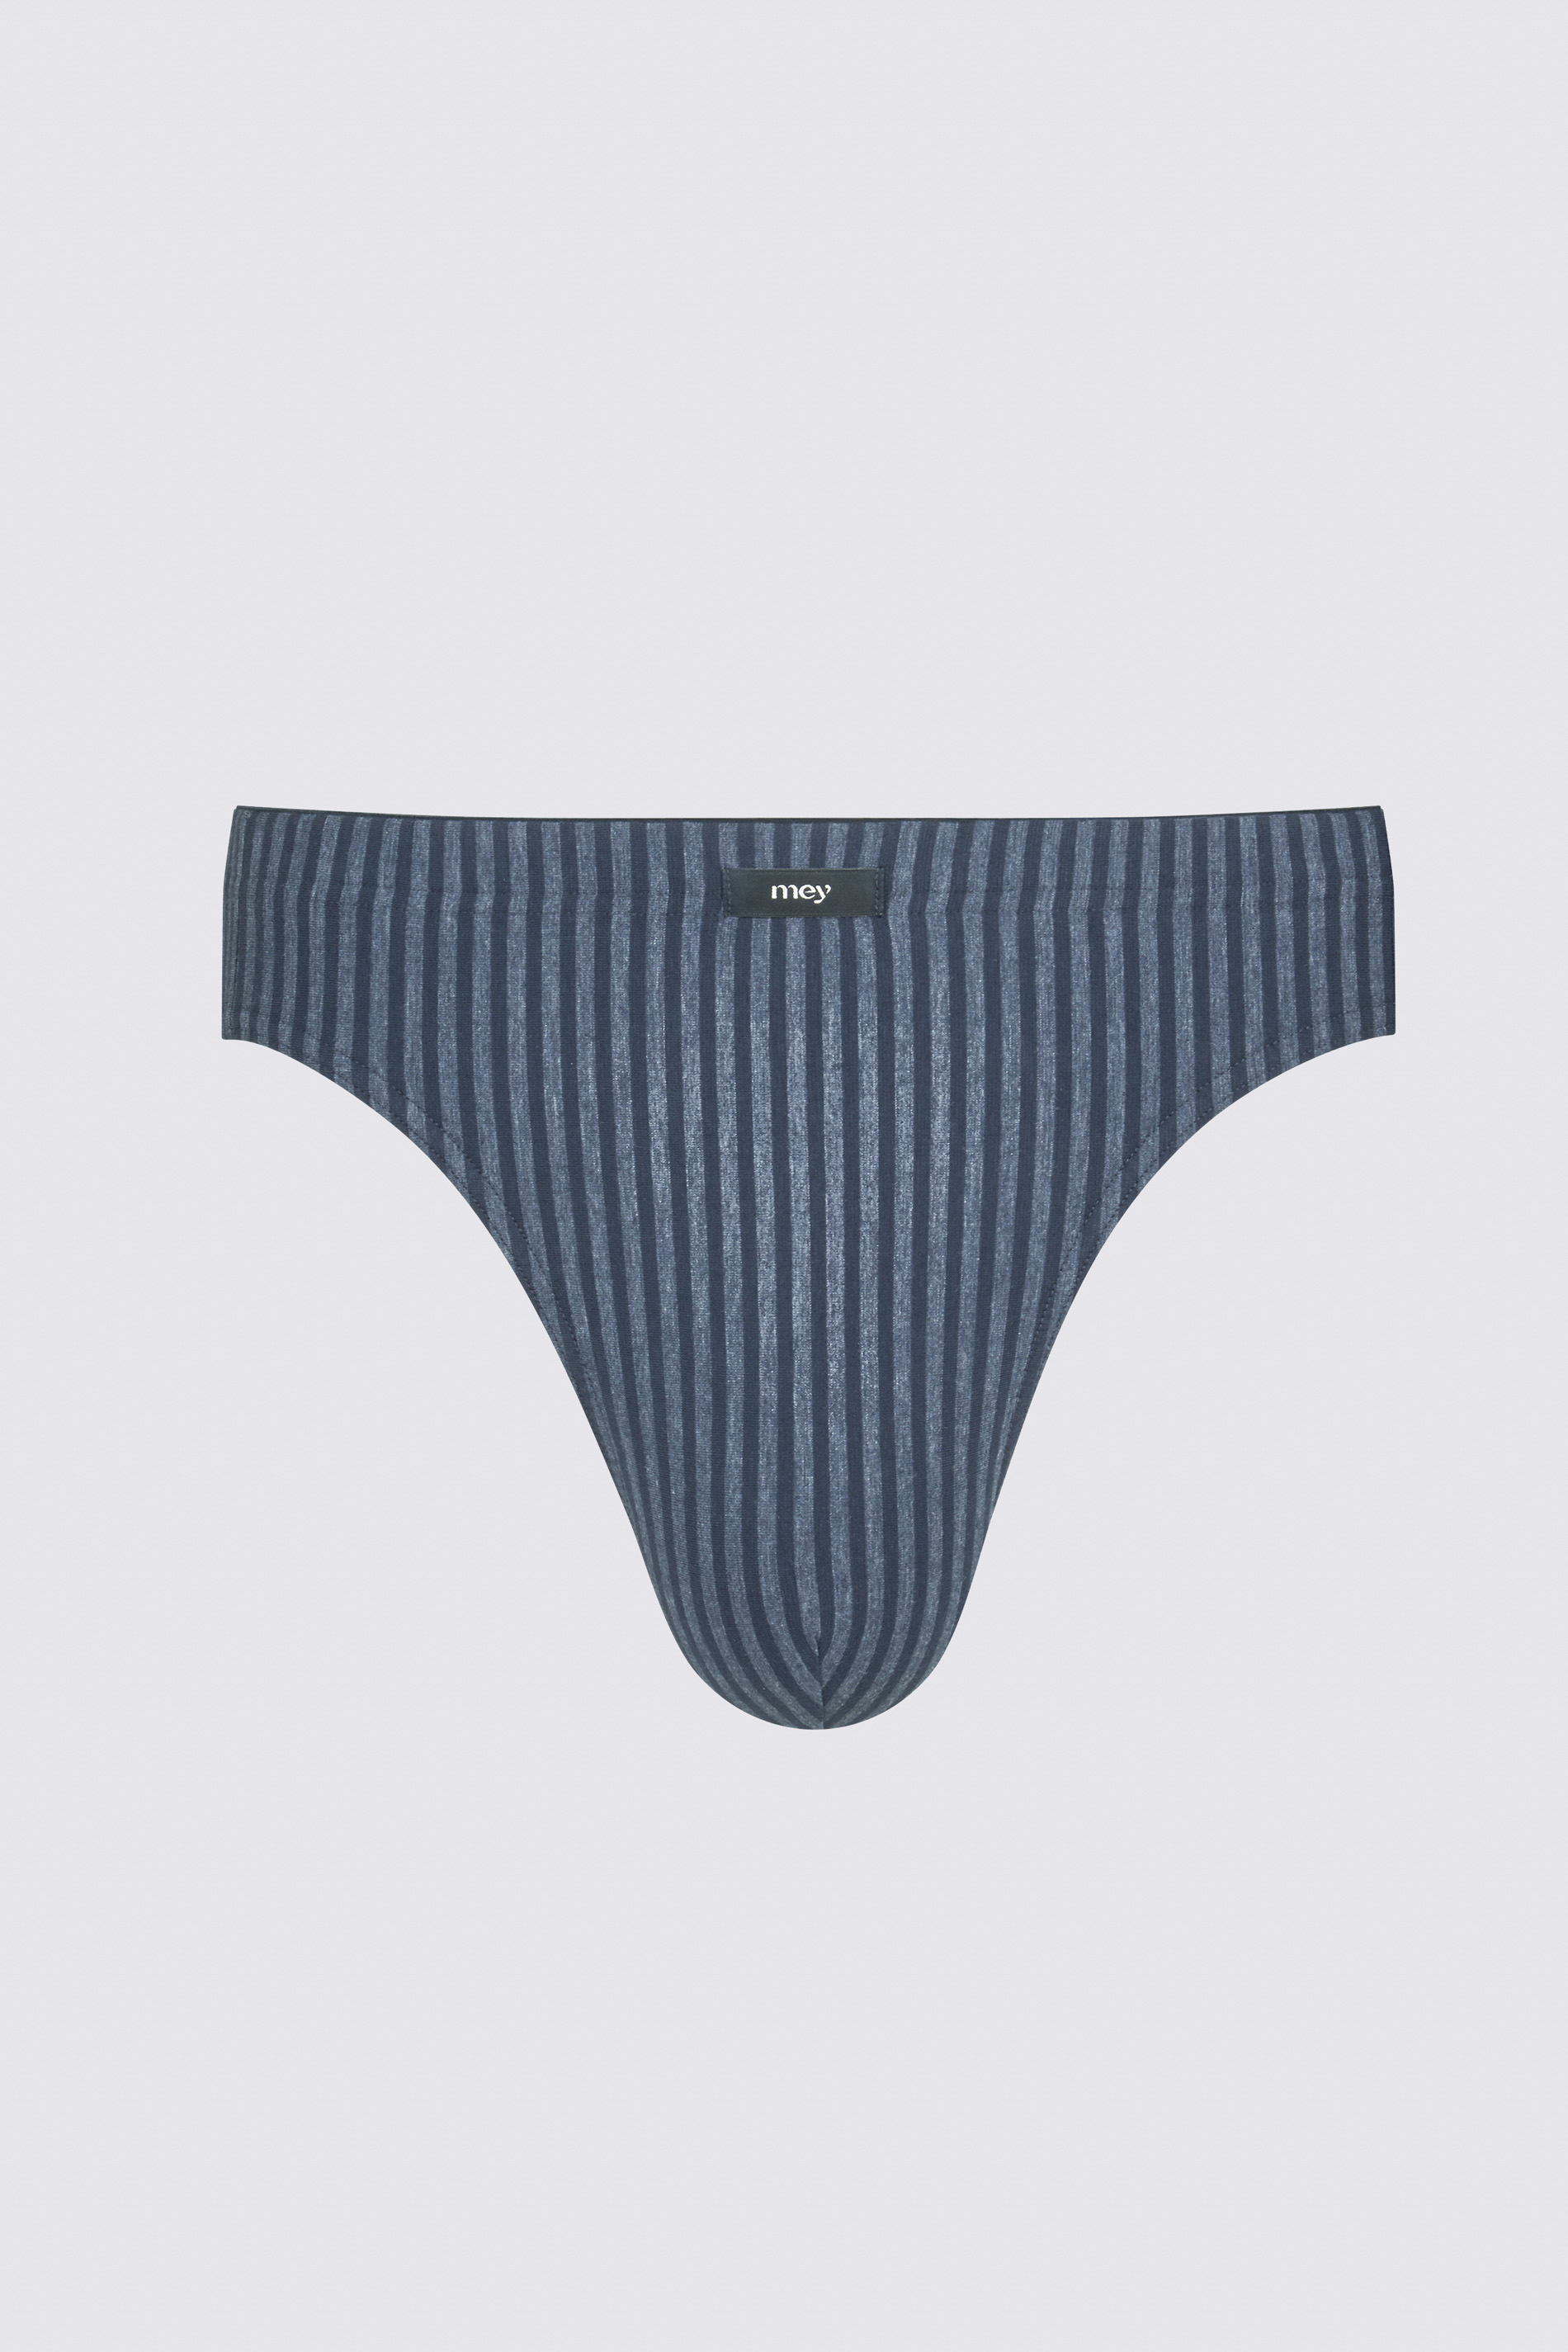 Jazz pants Yacht Blue Serie Tonal Stripes Cut Out | mey®